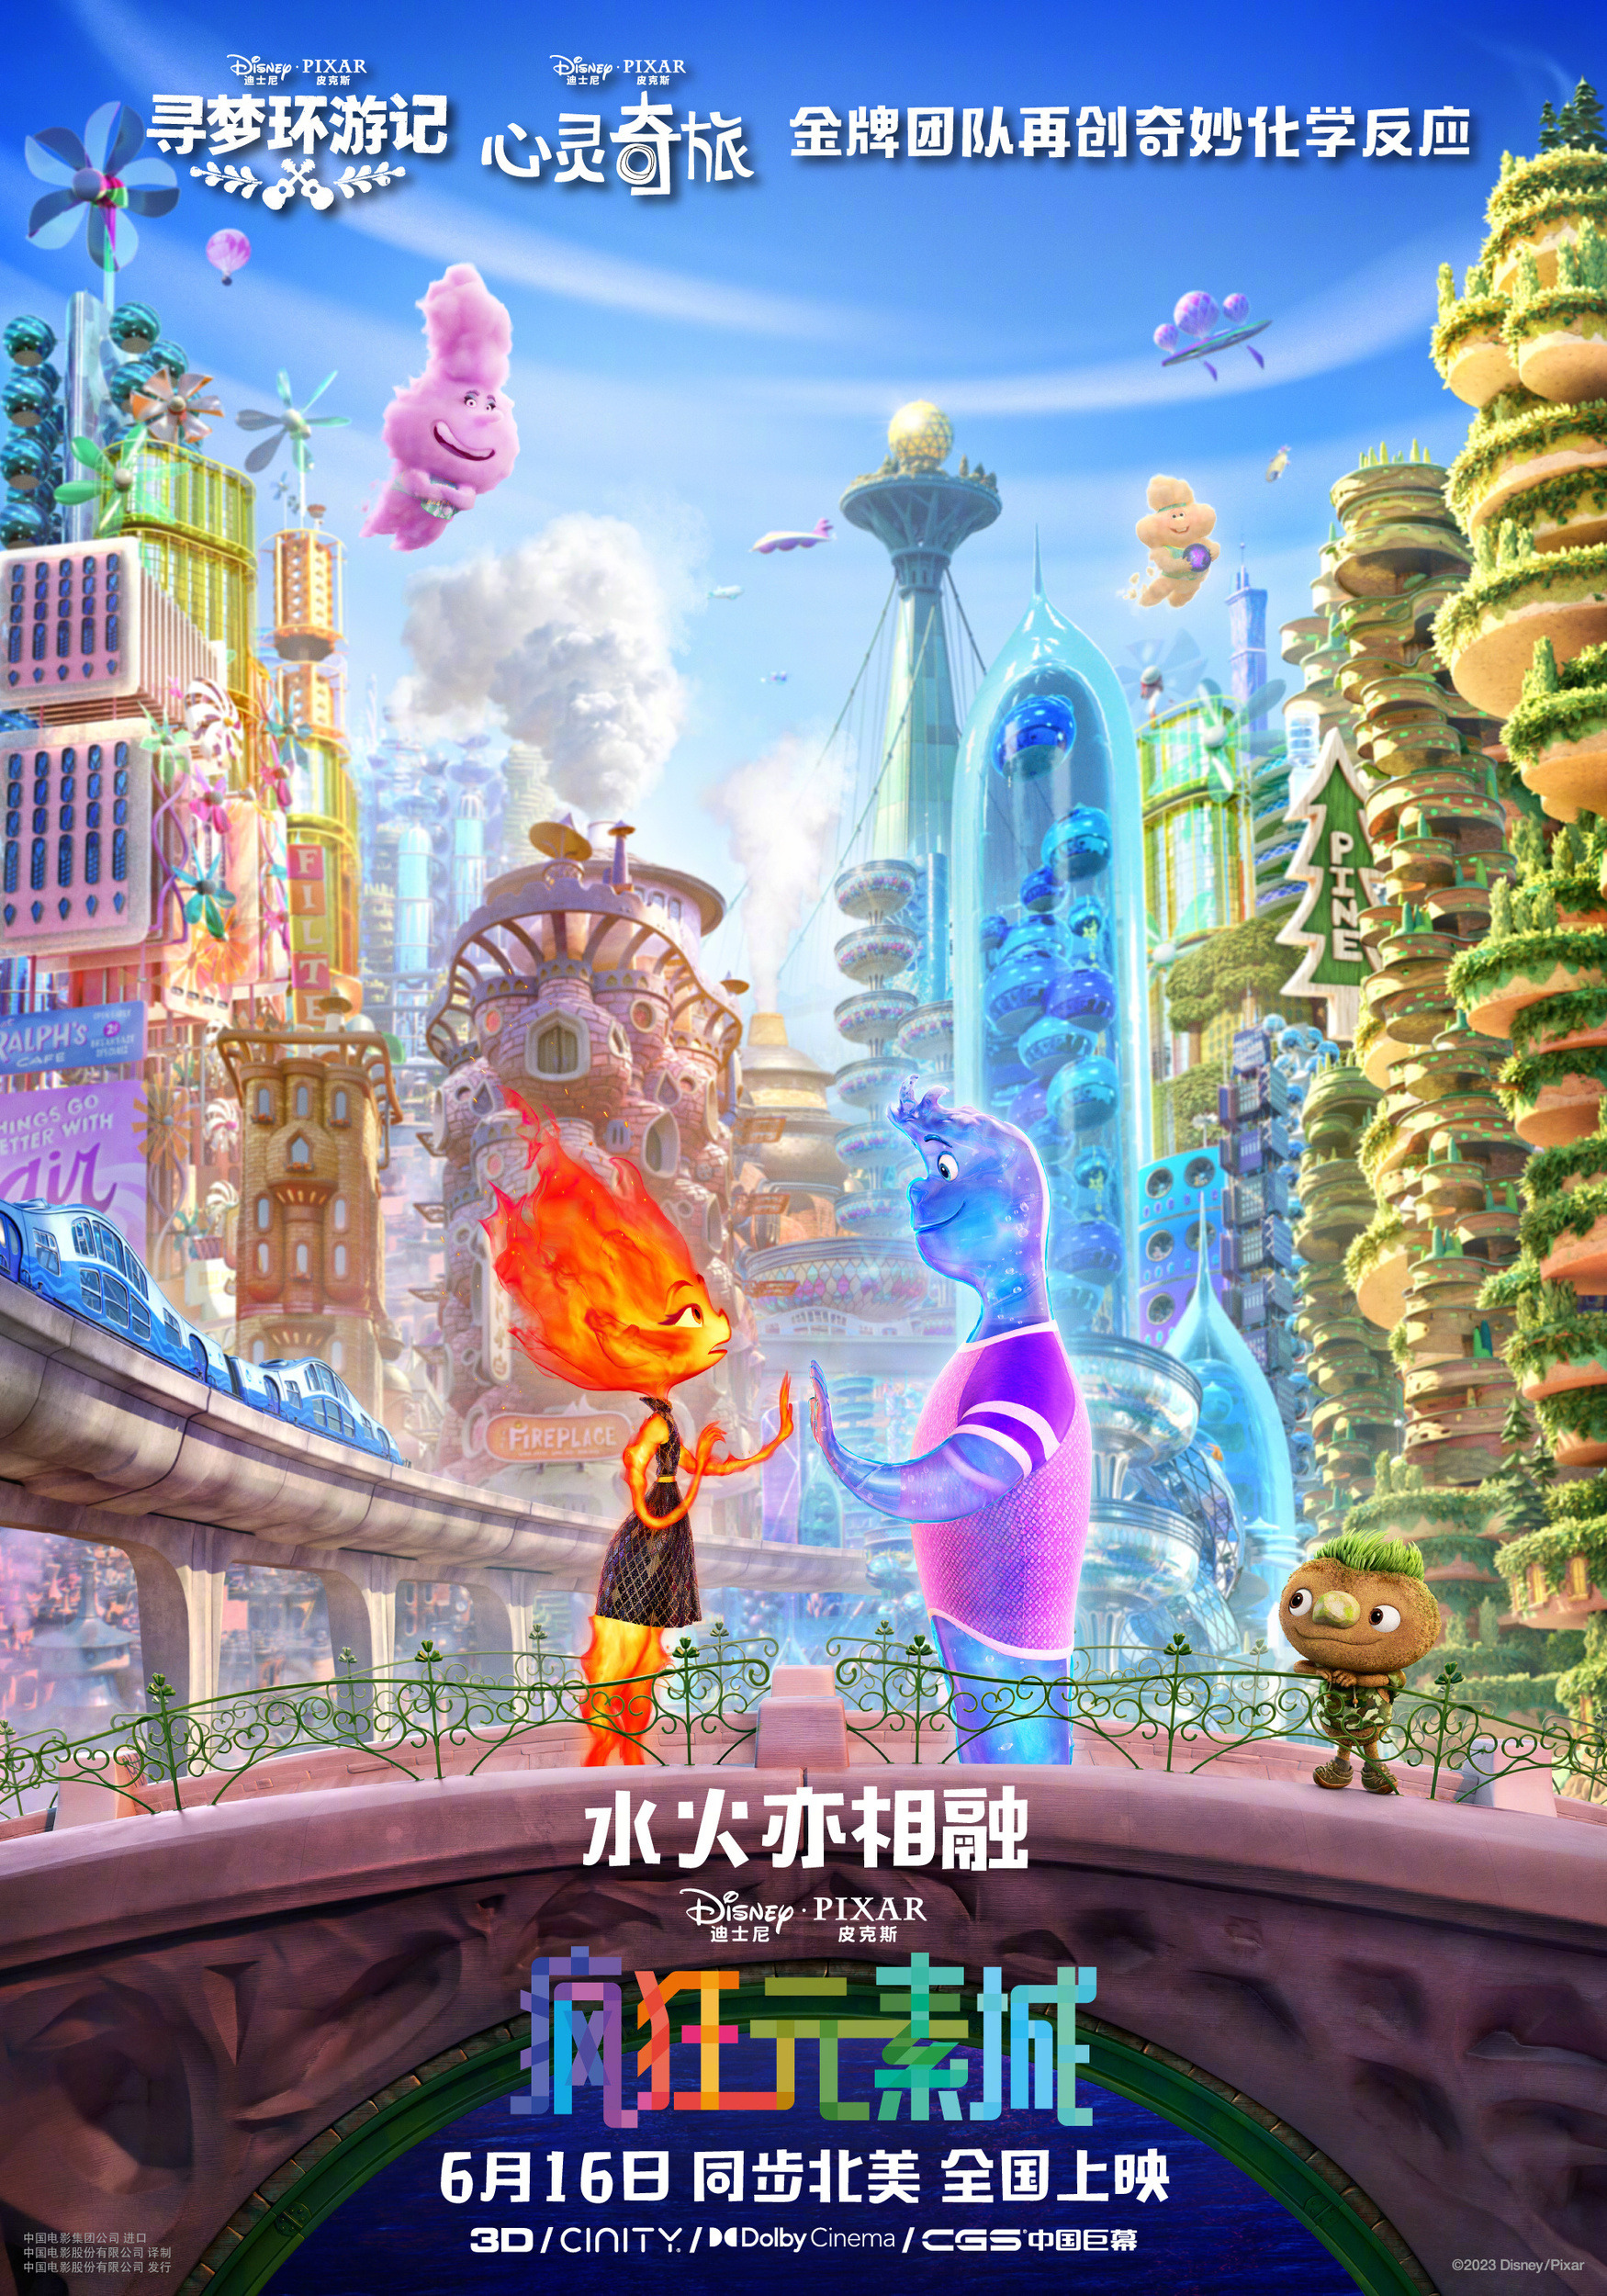 Mega Sized Movie Poster Image for Elemental (#8 of 18)